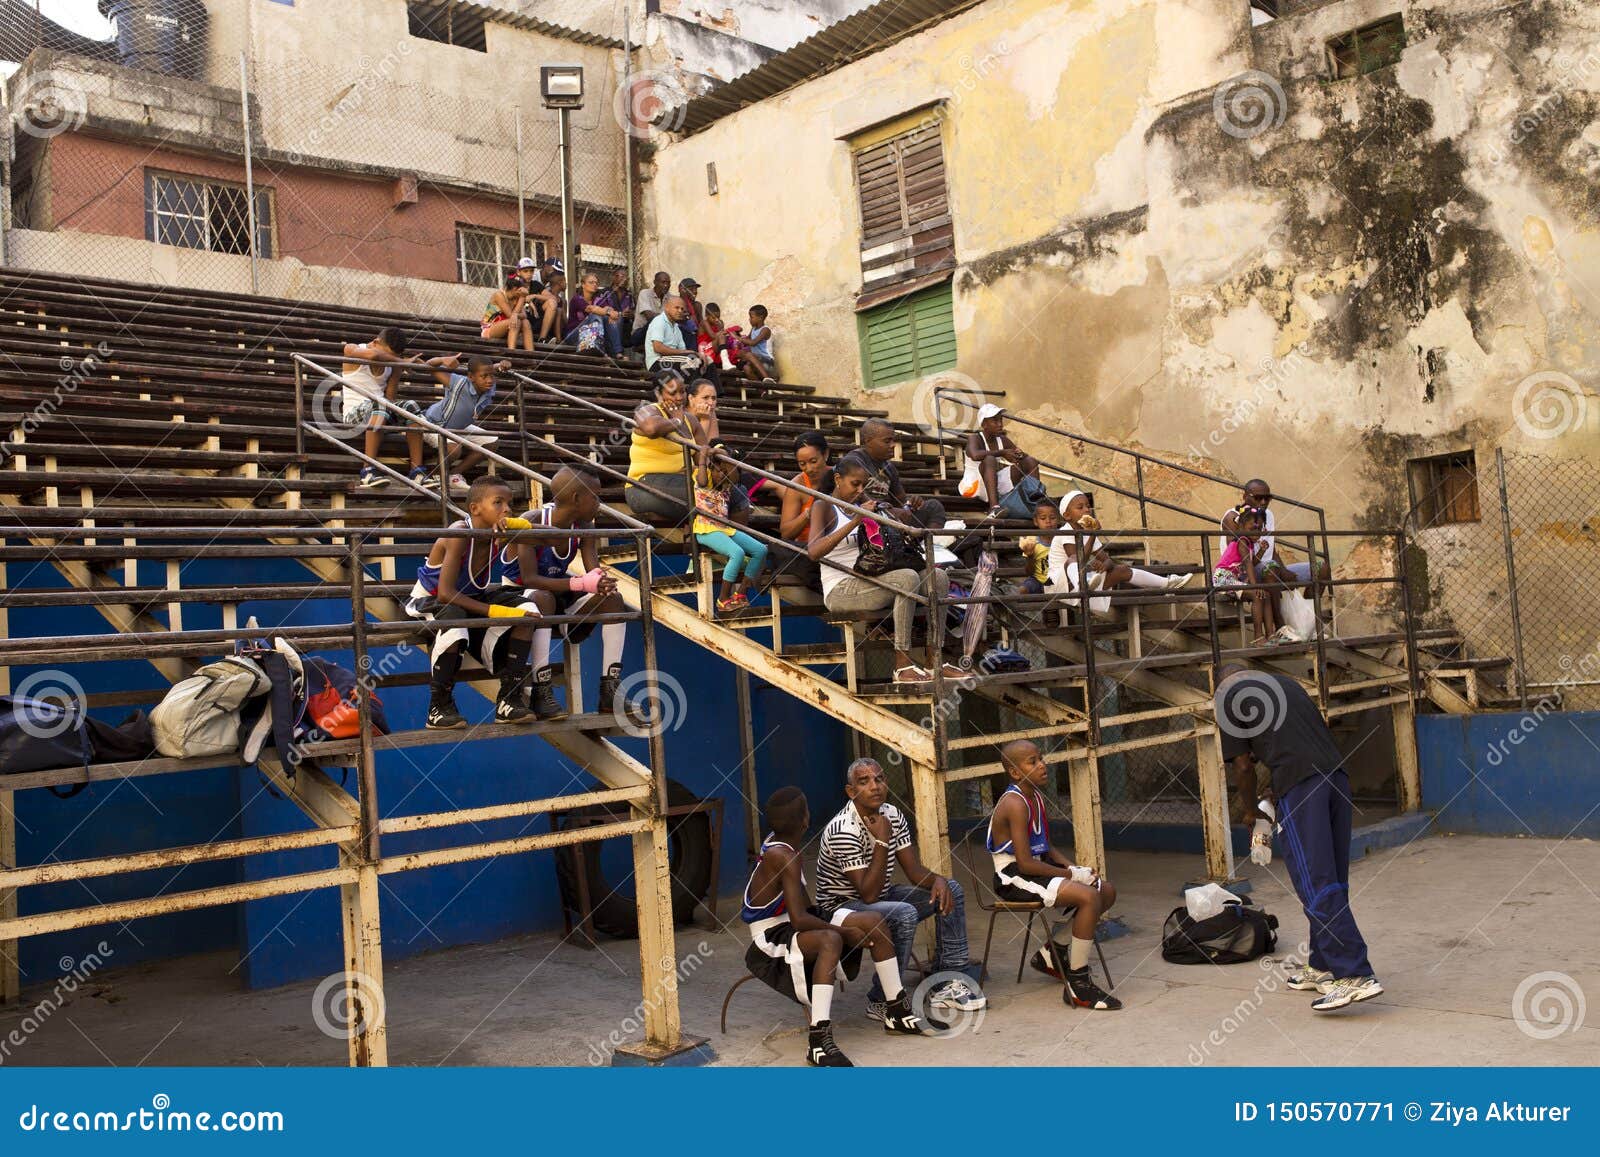 Rafael Trejo Boxing Gym, Havana, Cuba Editorial Photo - of famous, america: 150570771